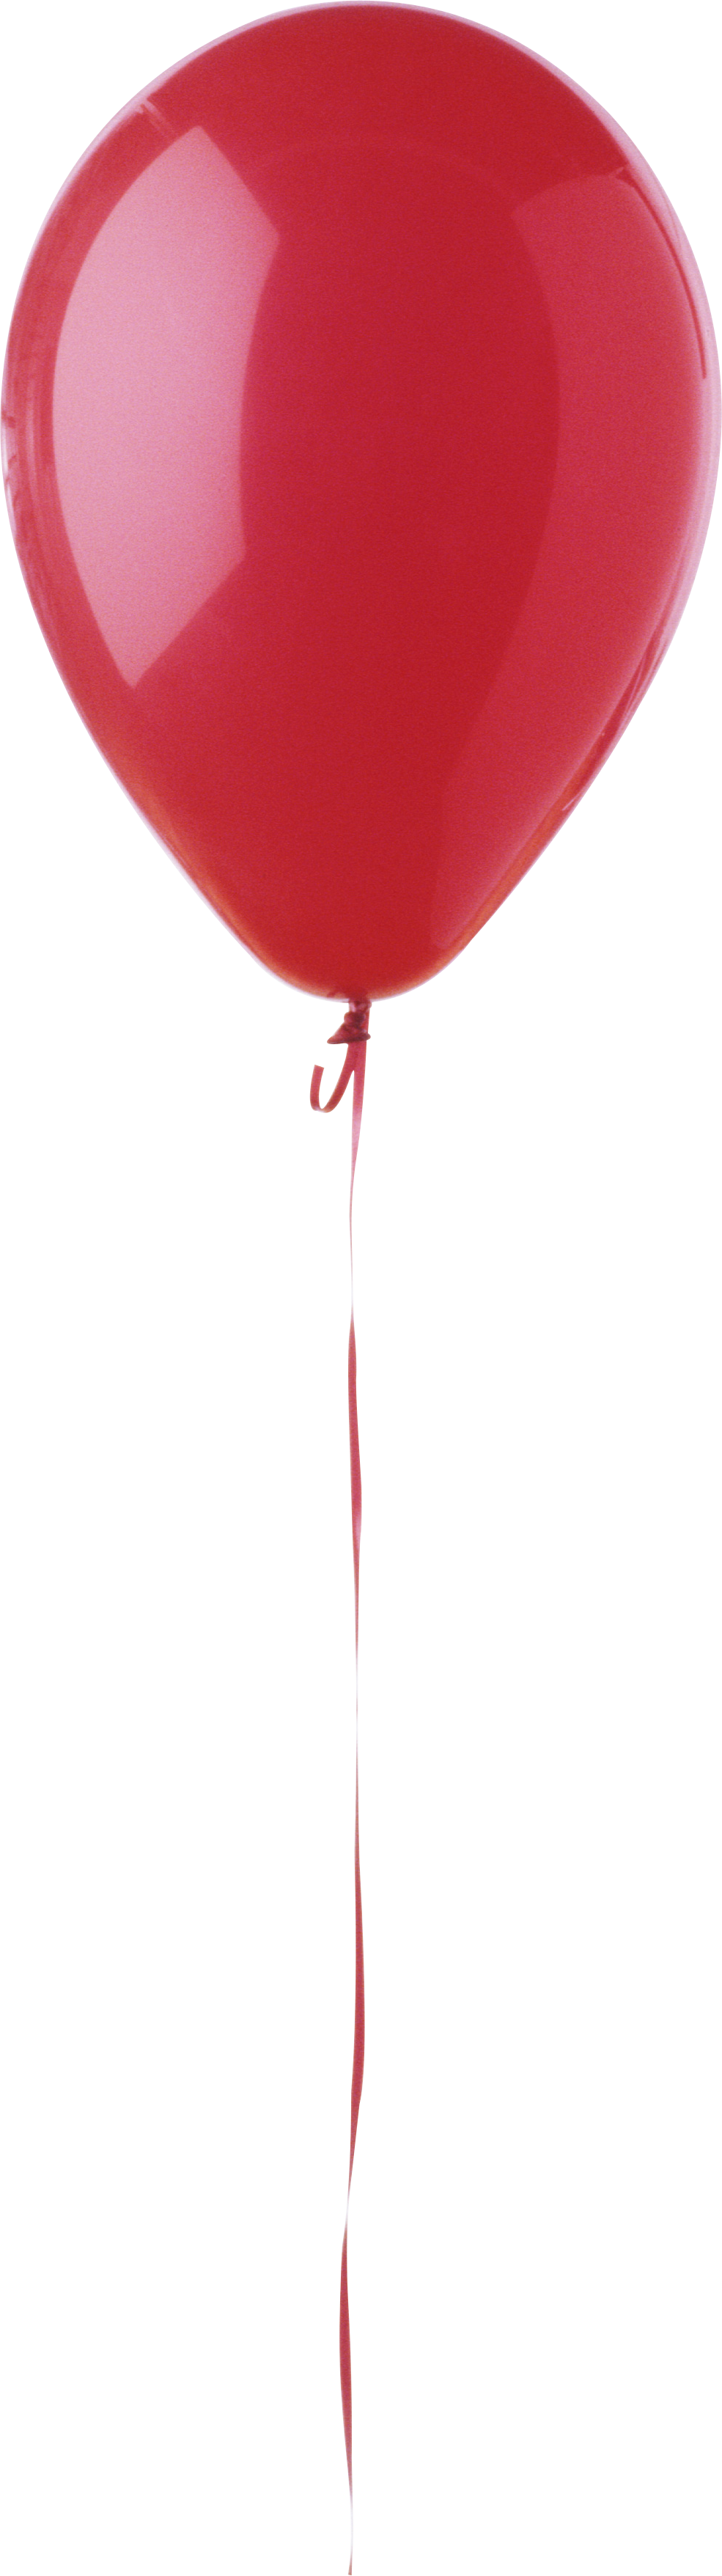 Single Balloon PNG Free Download